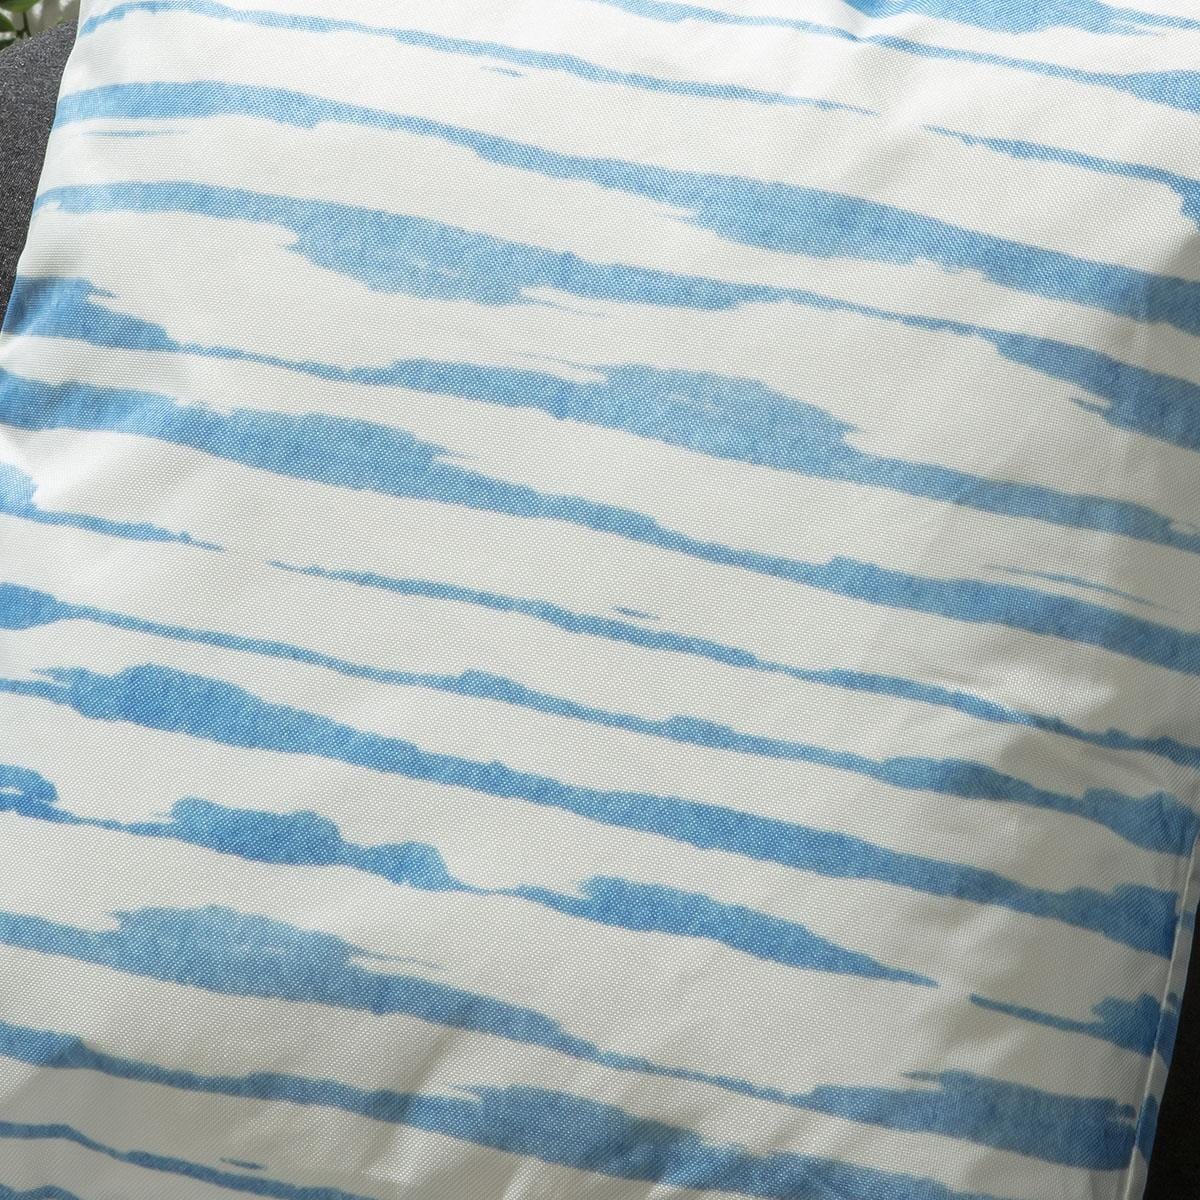 Quatropi 4 Blue & White Stripe Outdoor Cushions 45cm